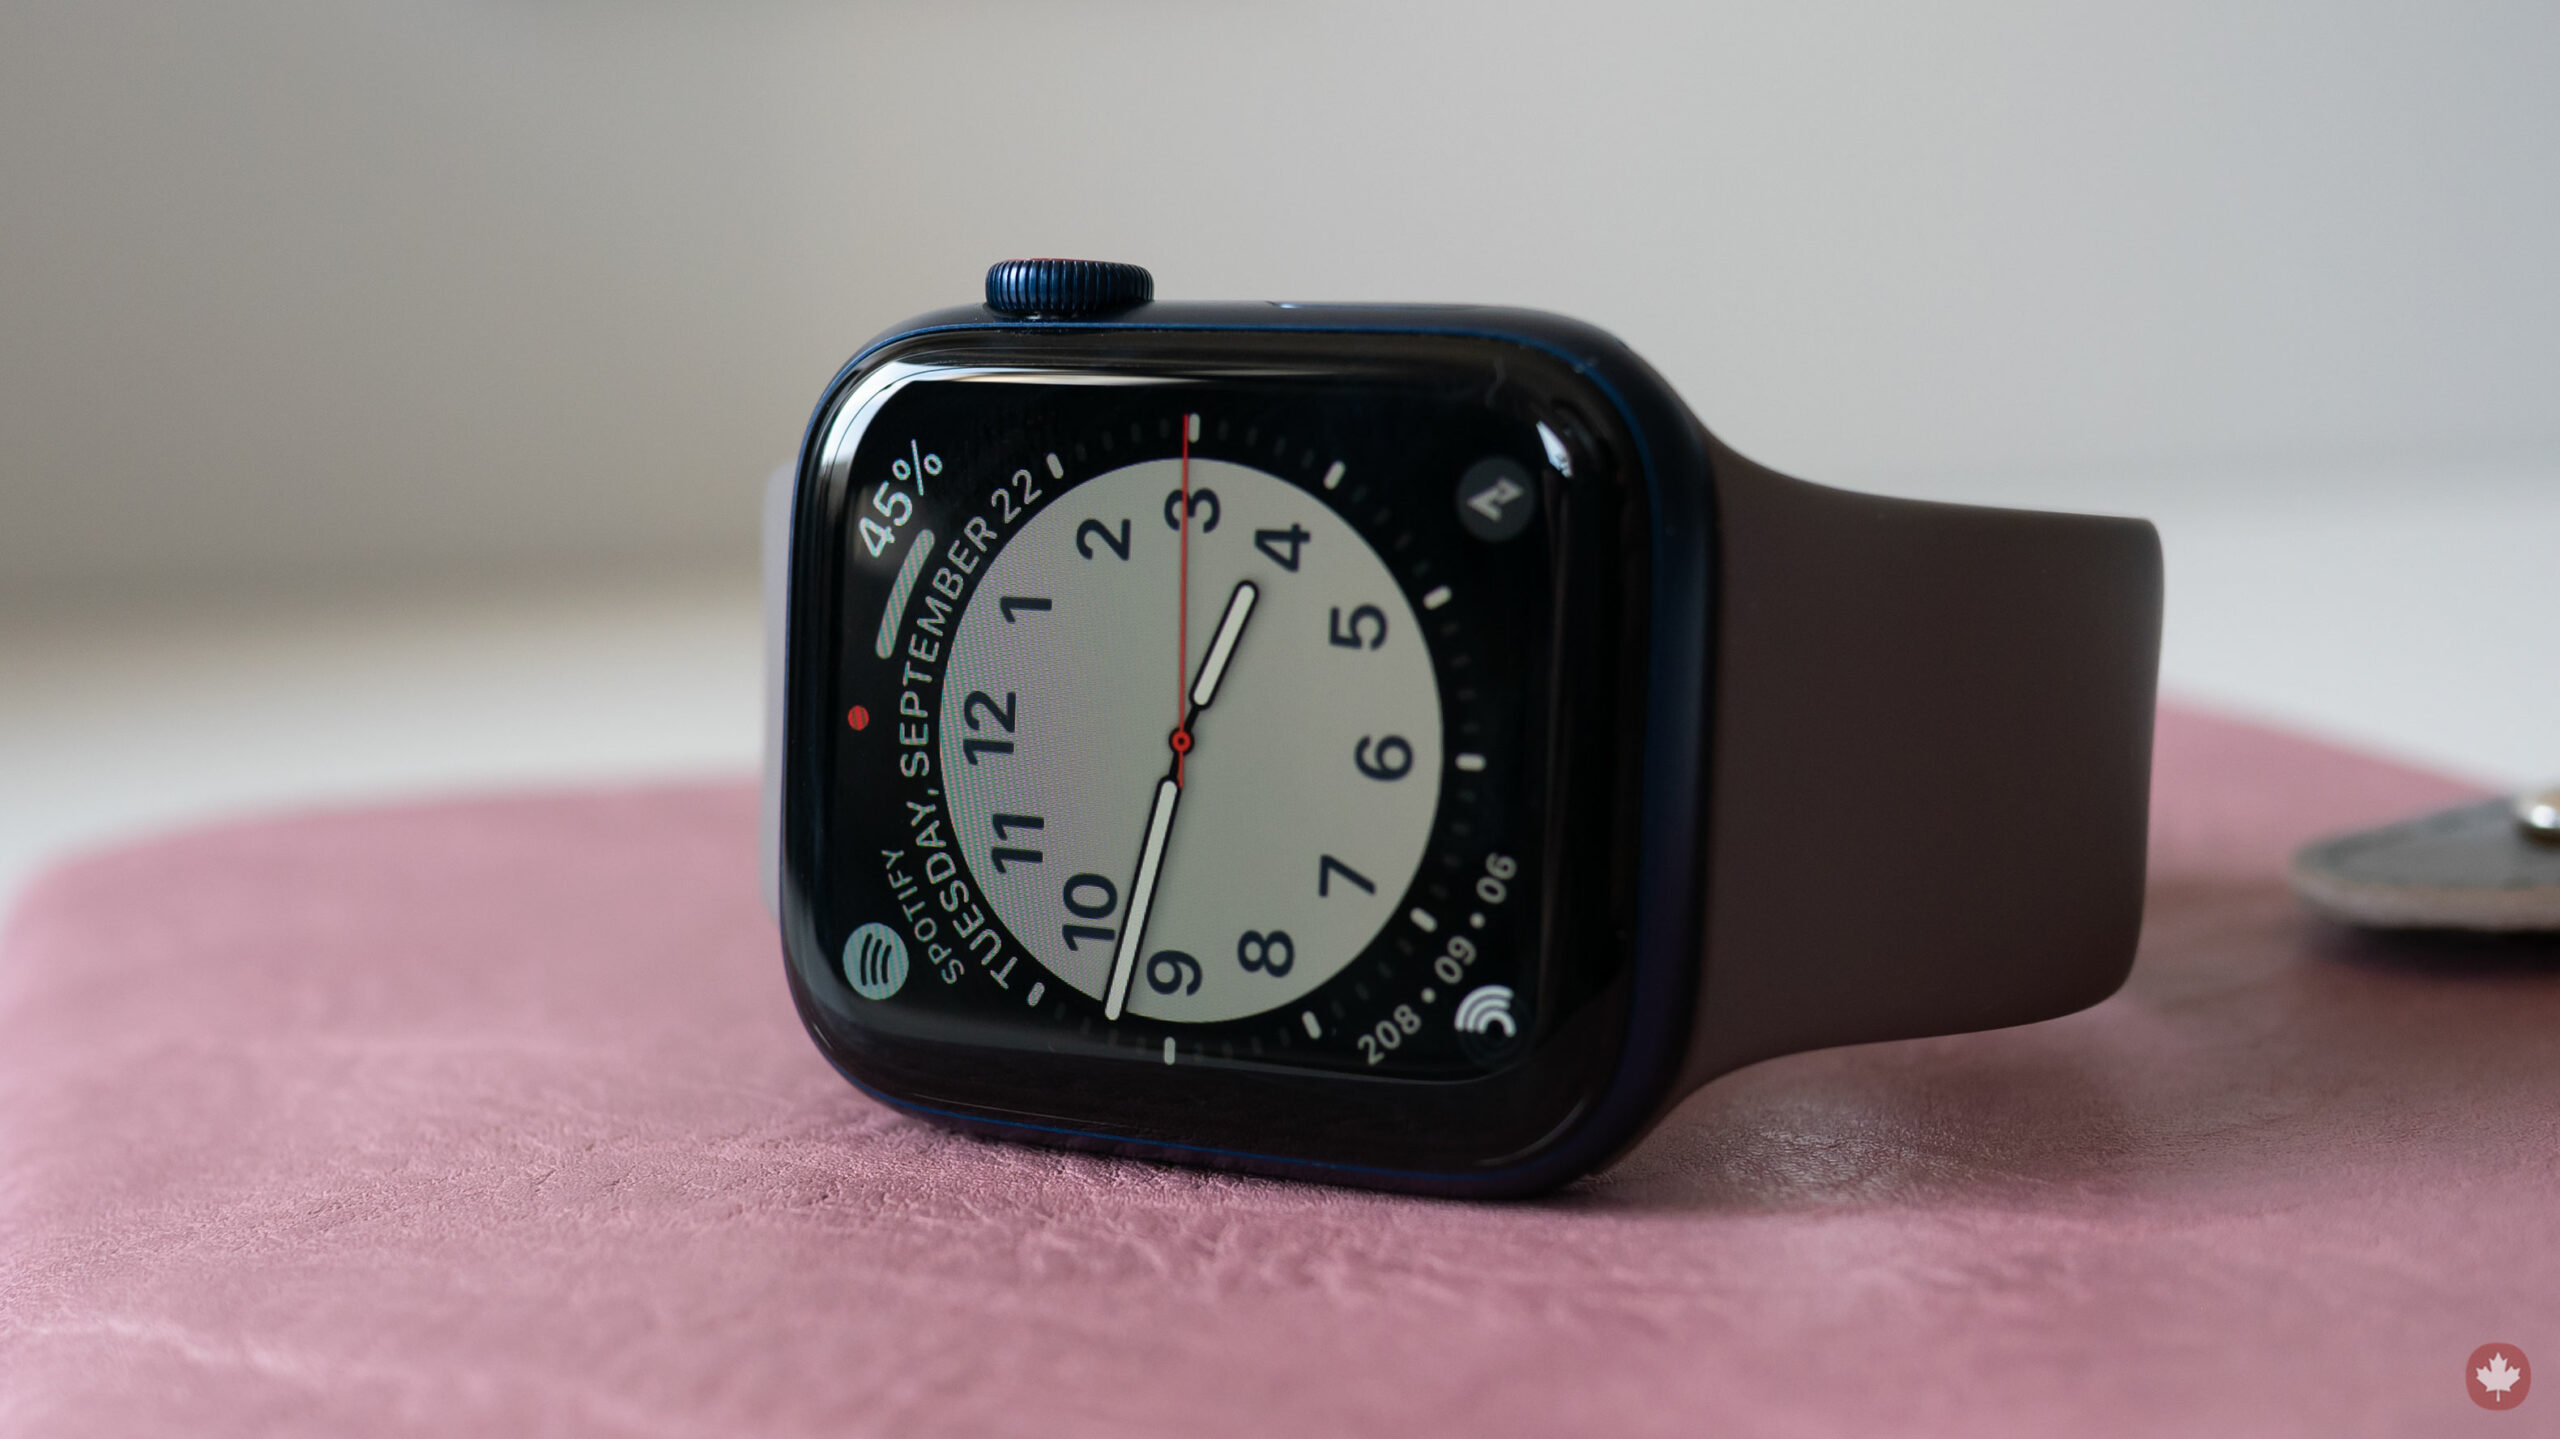 Apple Watch Series 6 on its side